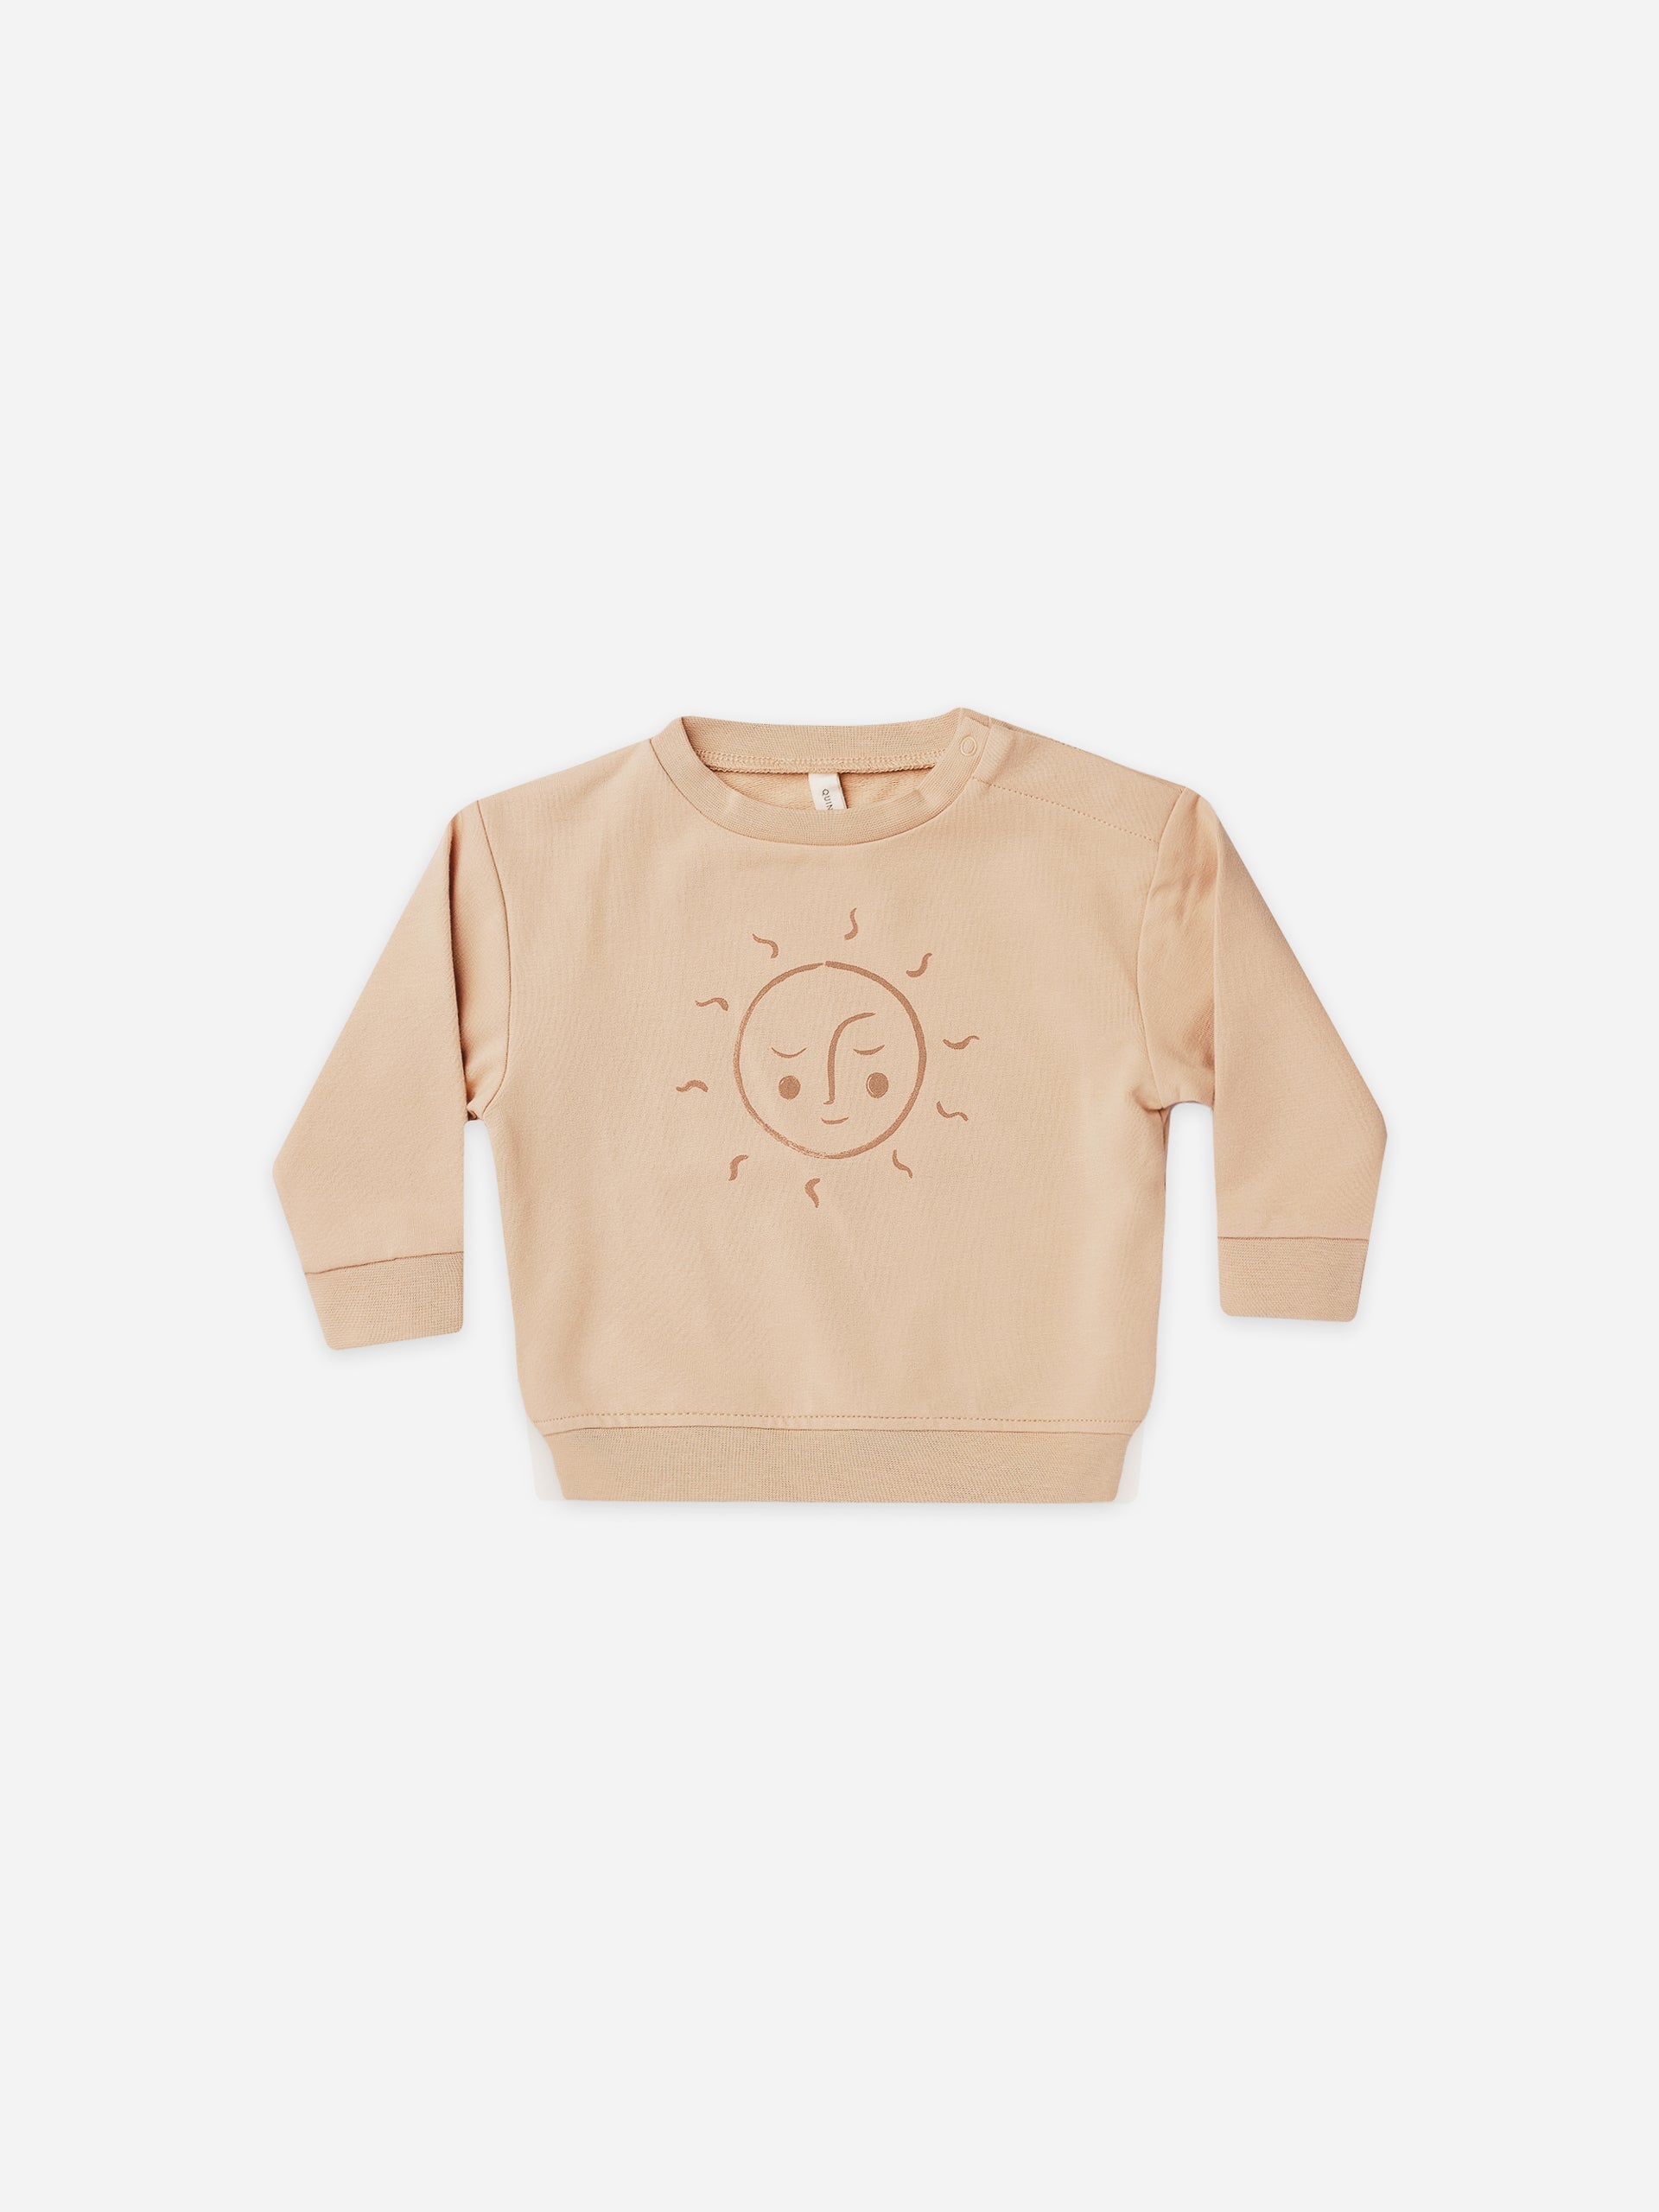 sweatshirt | sun - Quincy Mae | Baby Basics | Baby Clothing | Organic Baby Clothes | Modern Baby Boy Clothes |